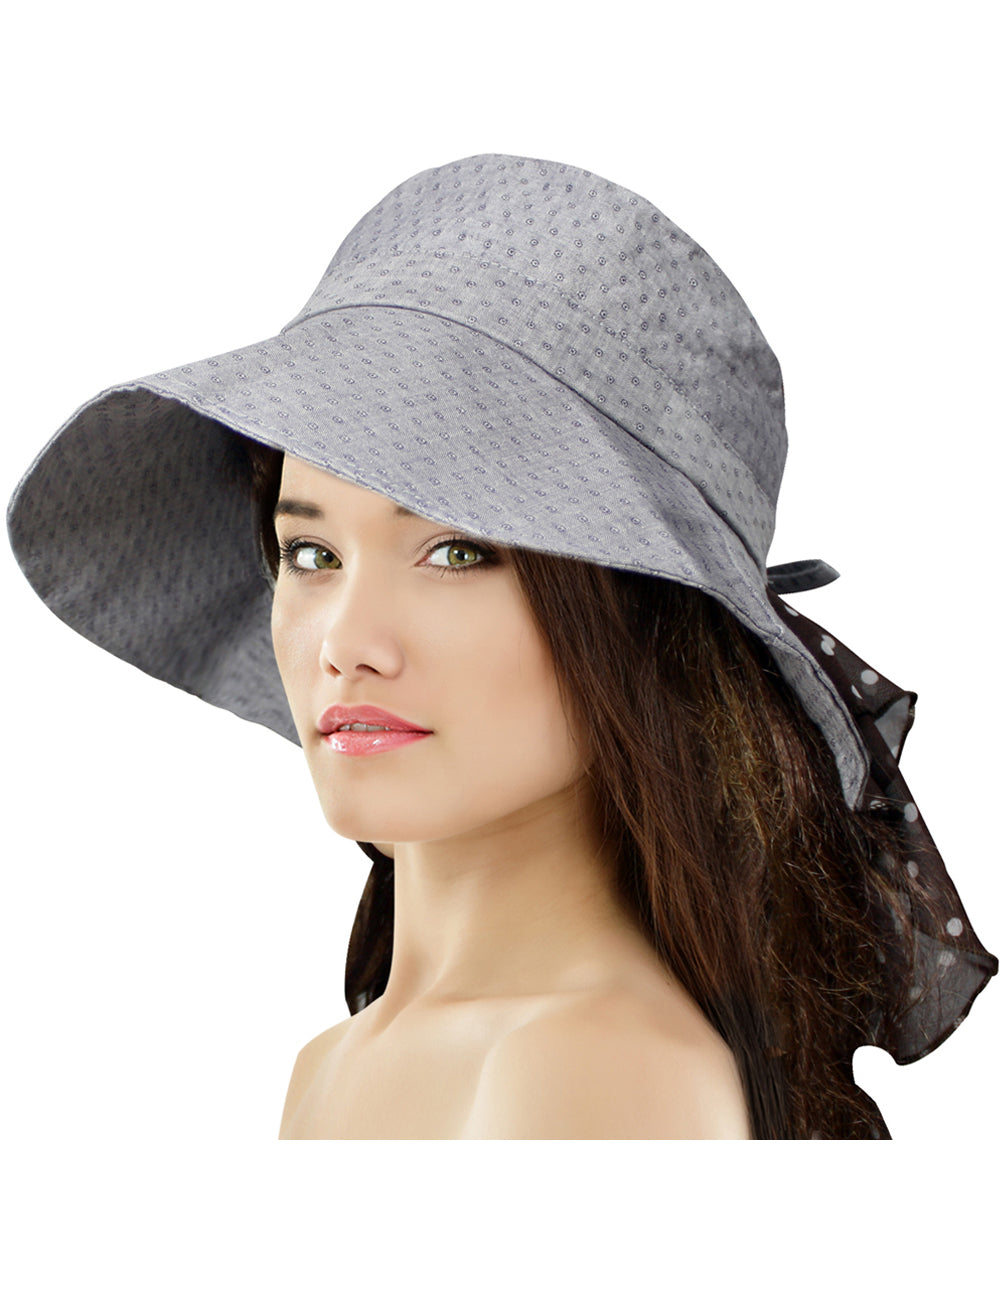 Dahlia Belted Polka Dot Bucket Summer Sun Hat